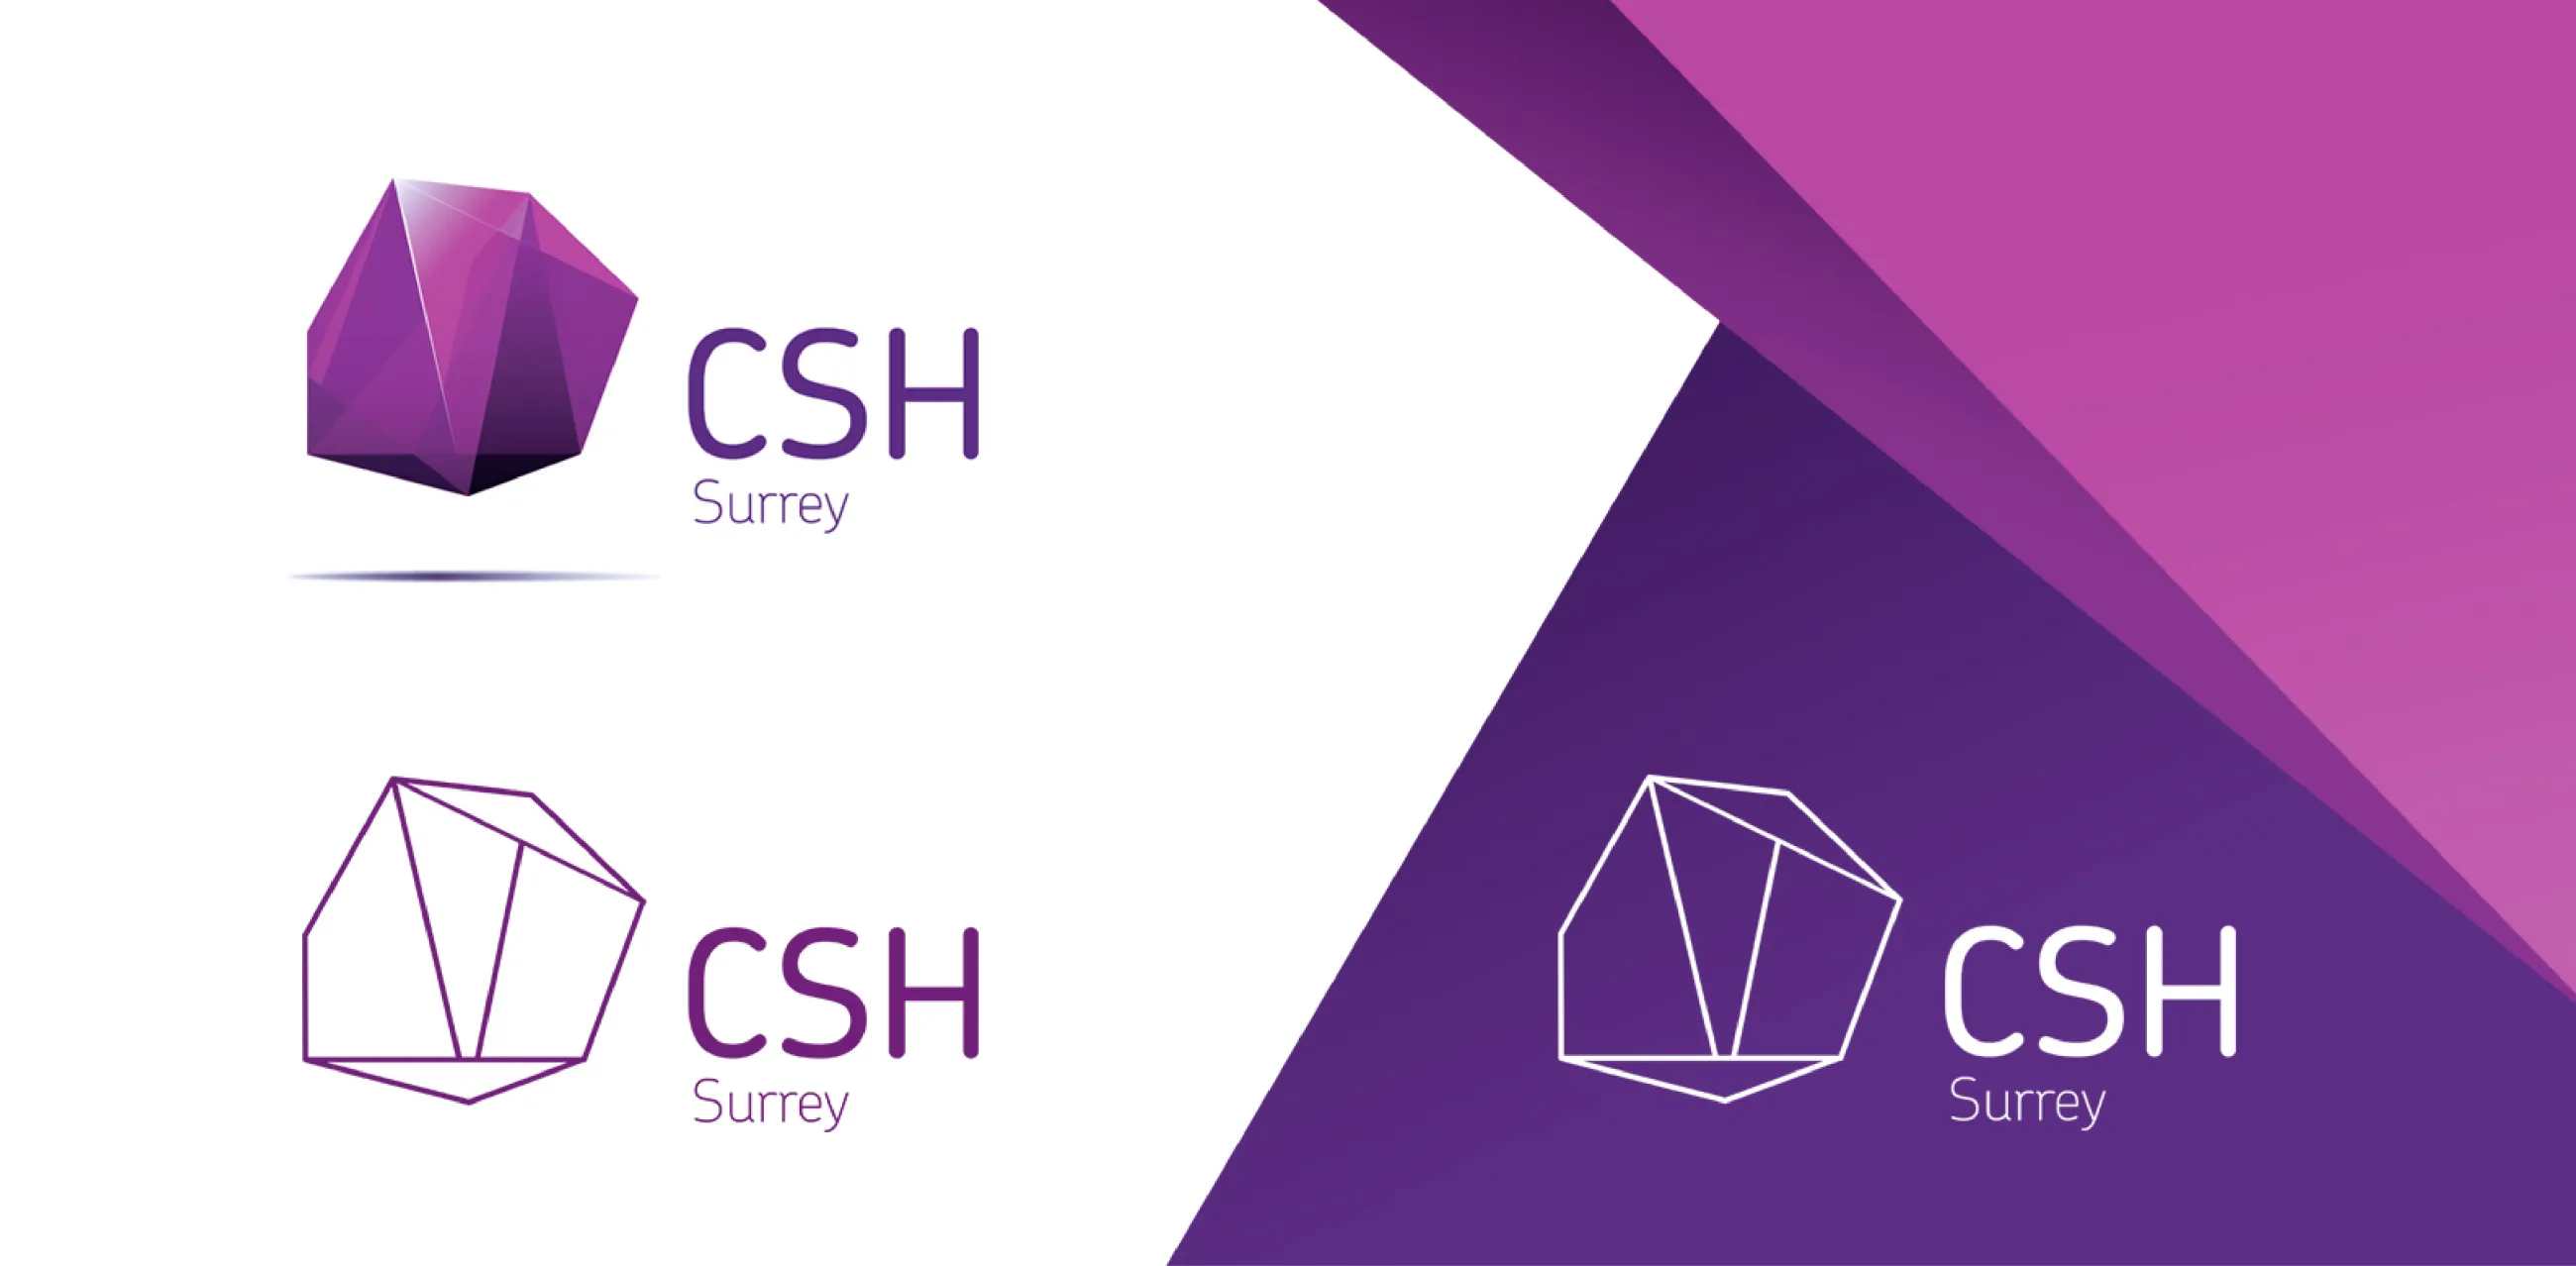 Variants of CSH Surrey logo design